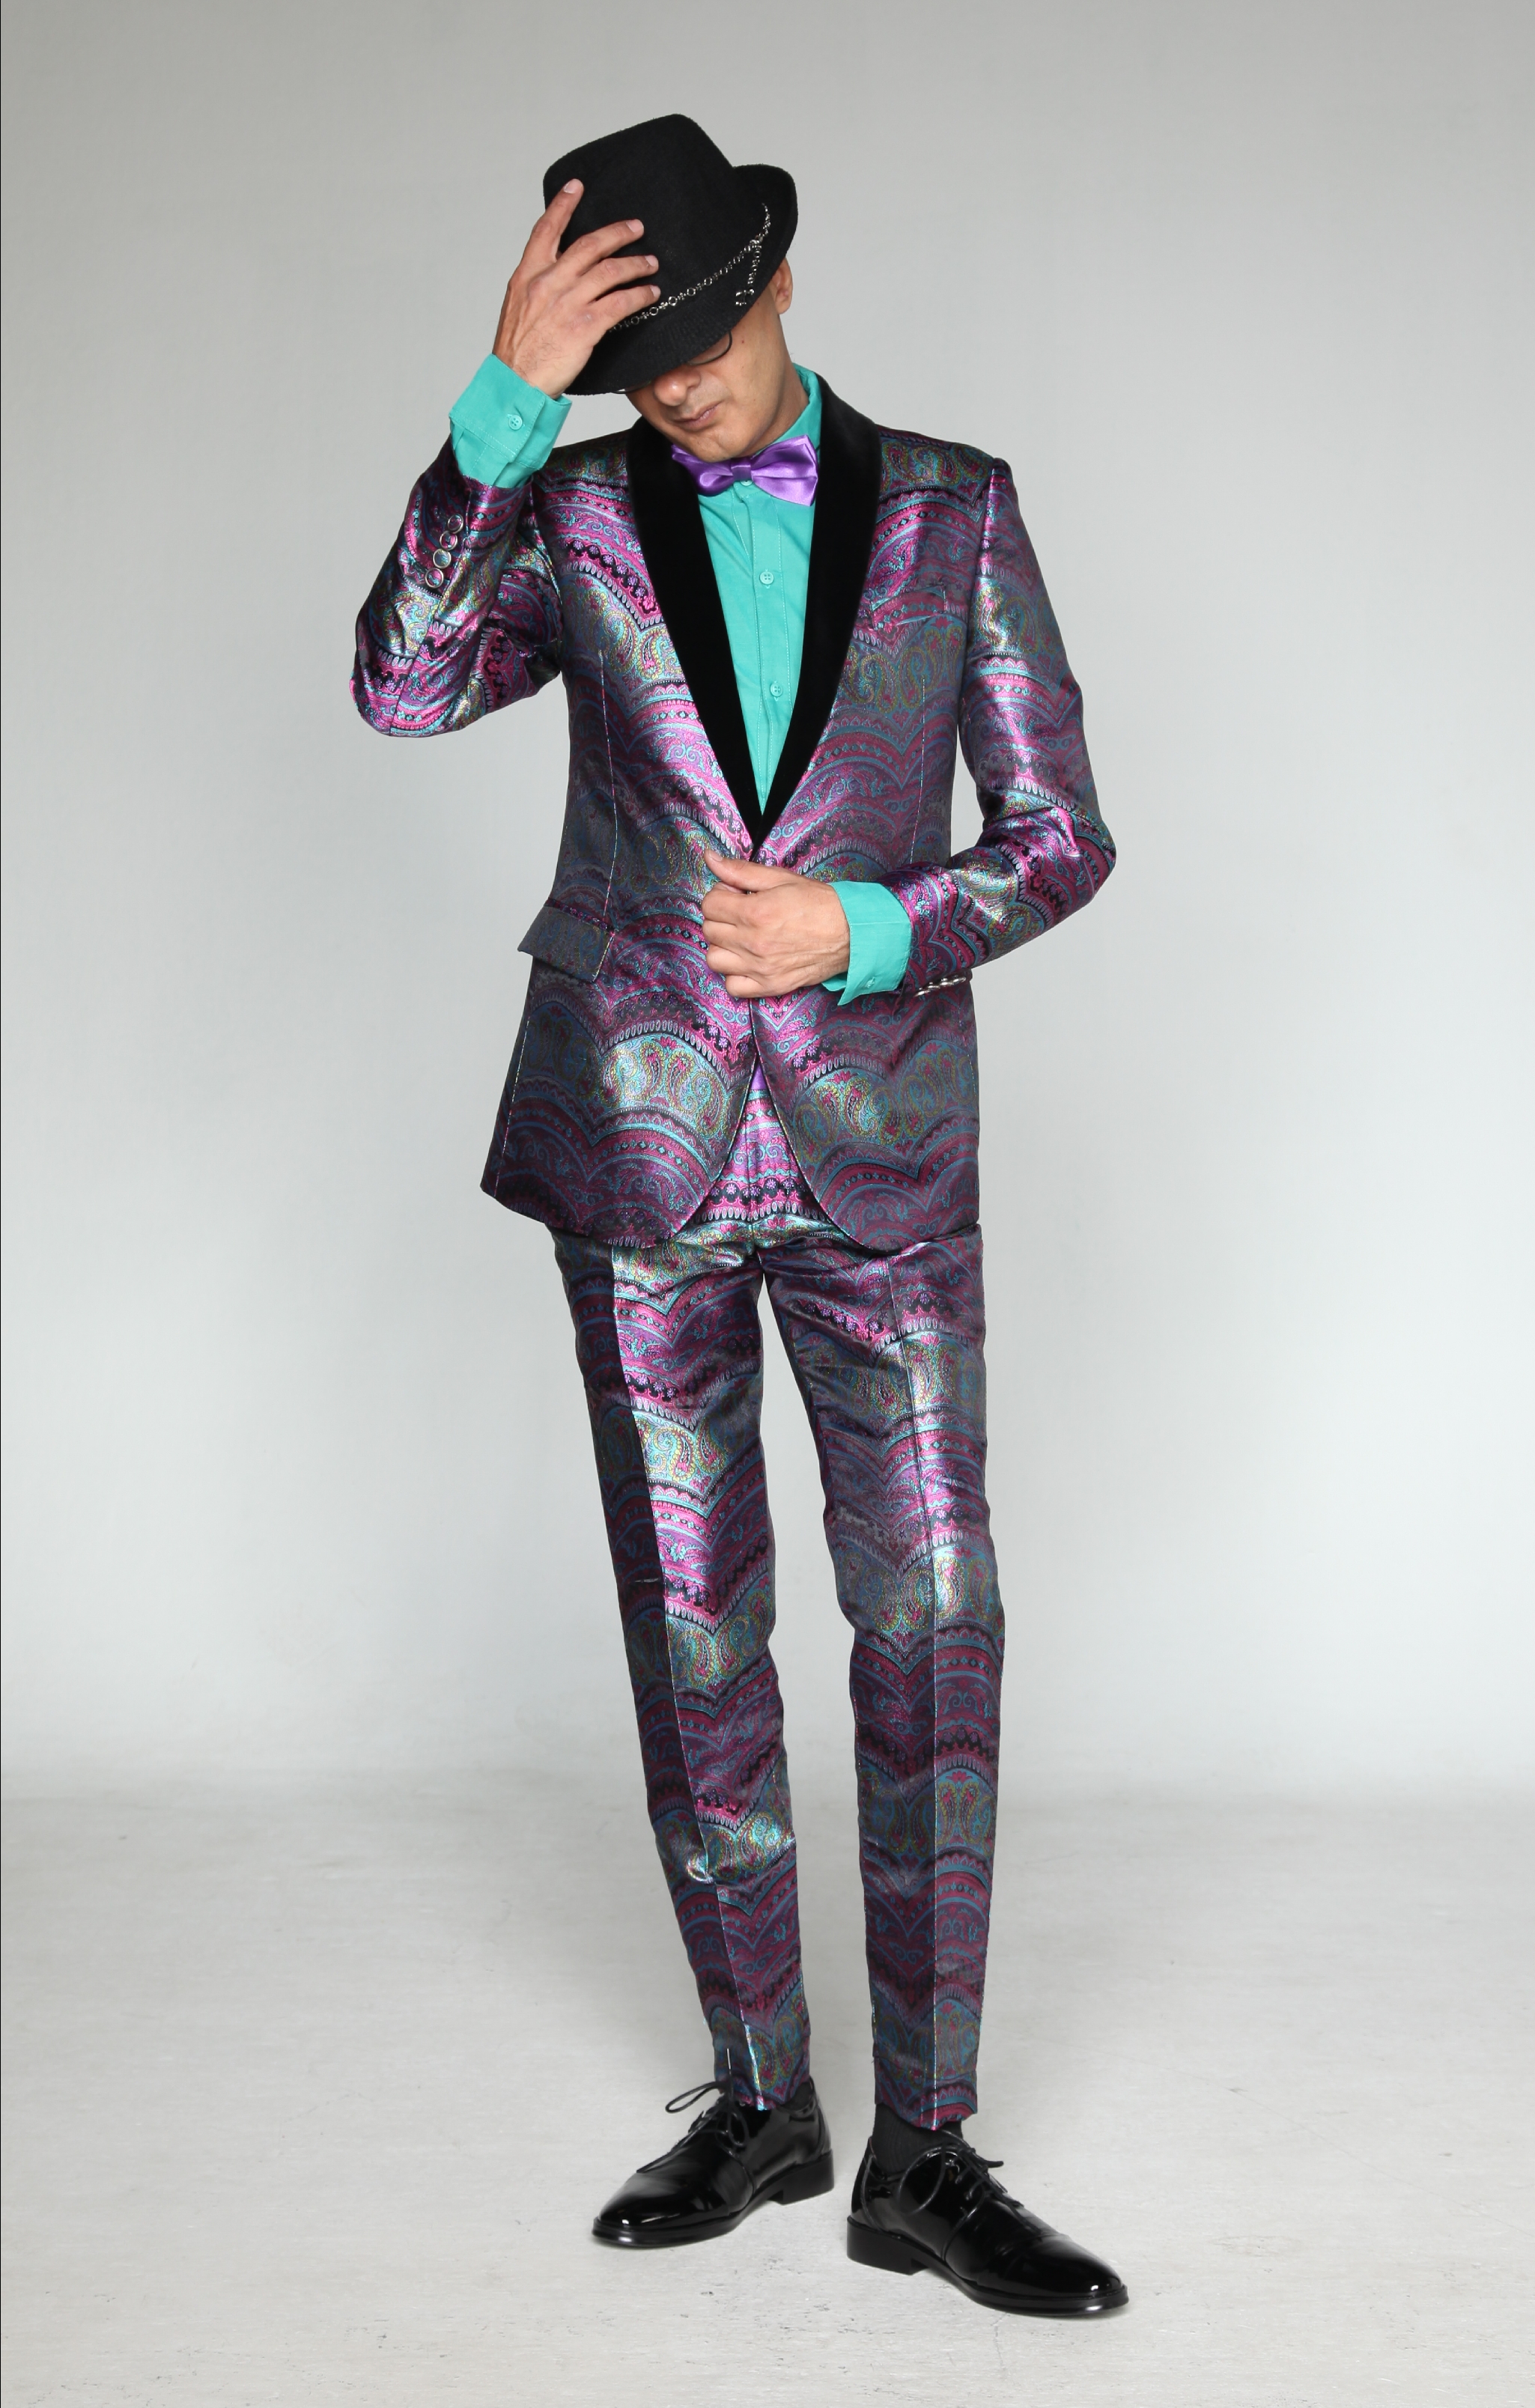 Suit Rental Suits Rent Hire Designer My Singapore Tailor Tailors Rentals Shop Tuxedo Black Tie Wedding Formal 22